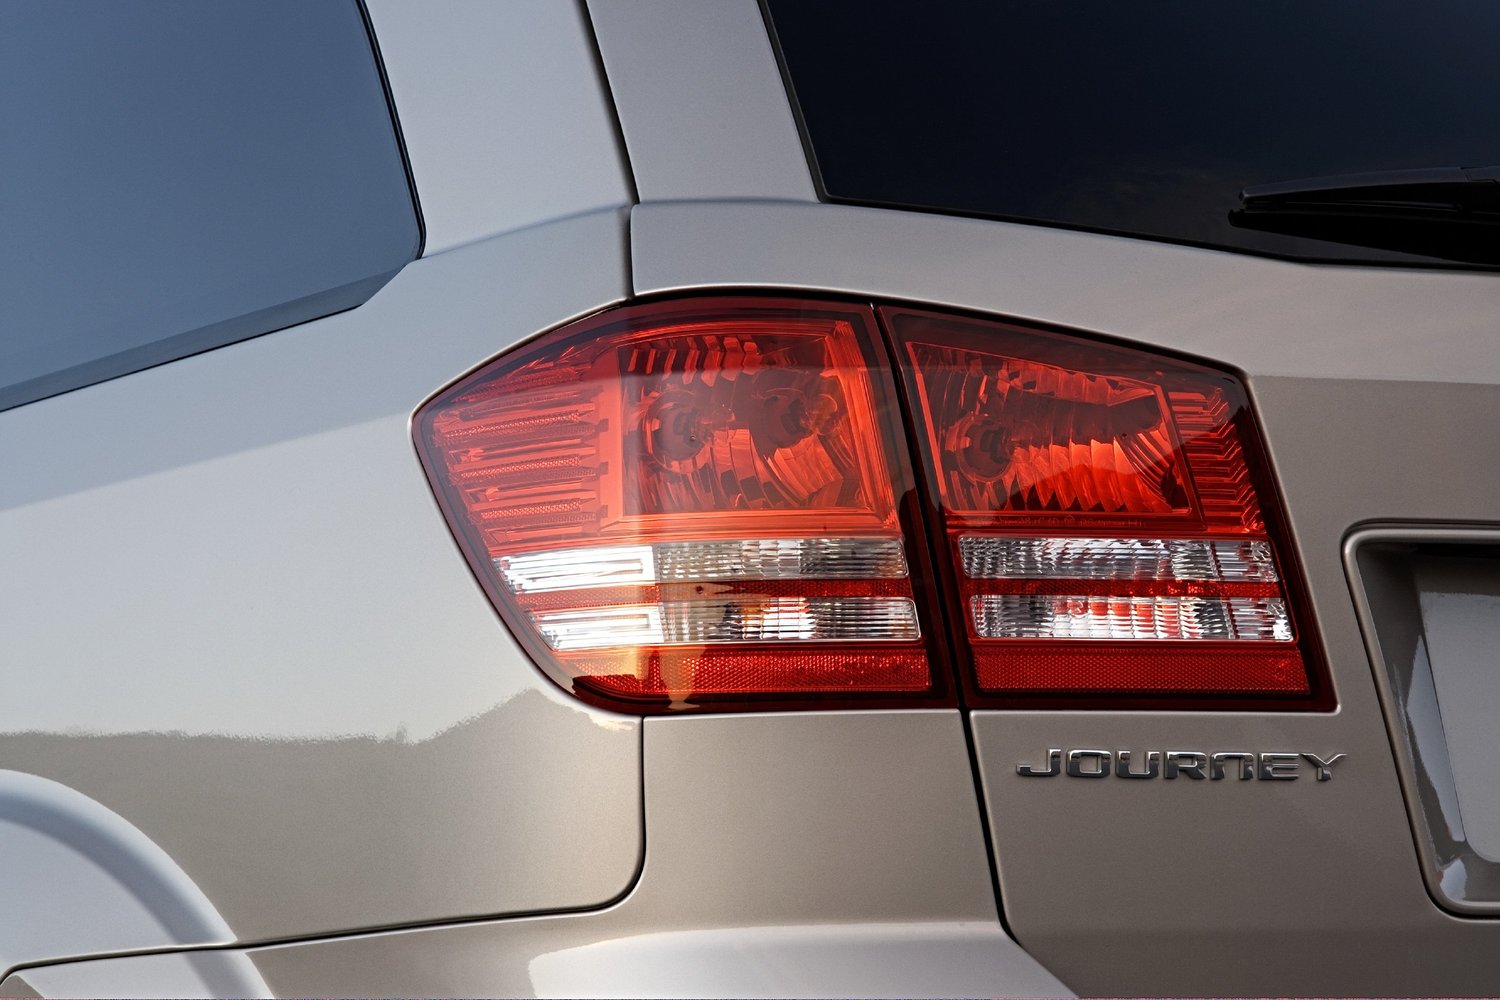 кроссовер Dodge Journey 2008 - 2016г выпуска модификация R/T 3.6 AT (283 л.с.) 4×4